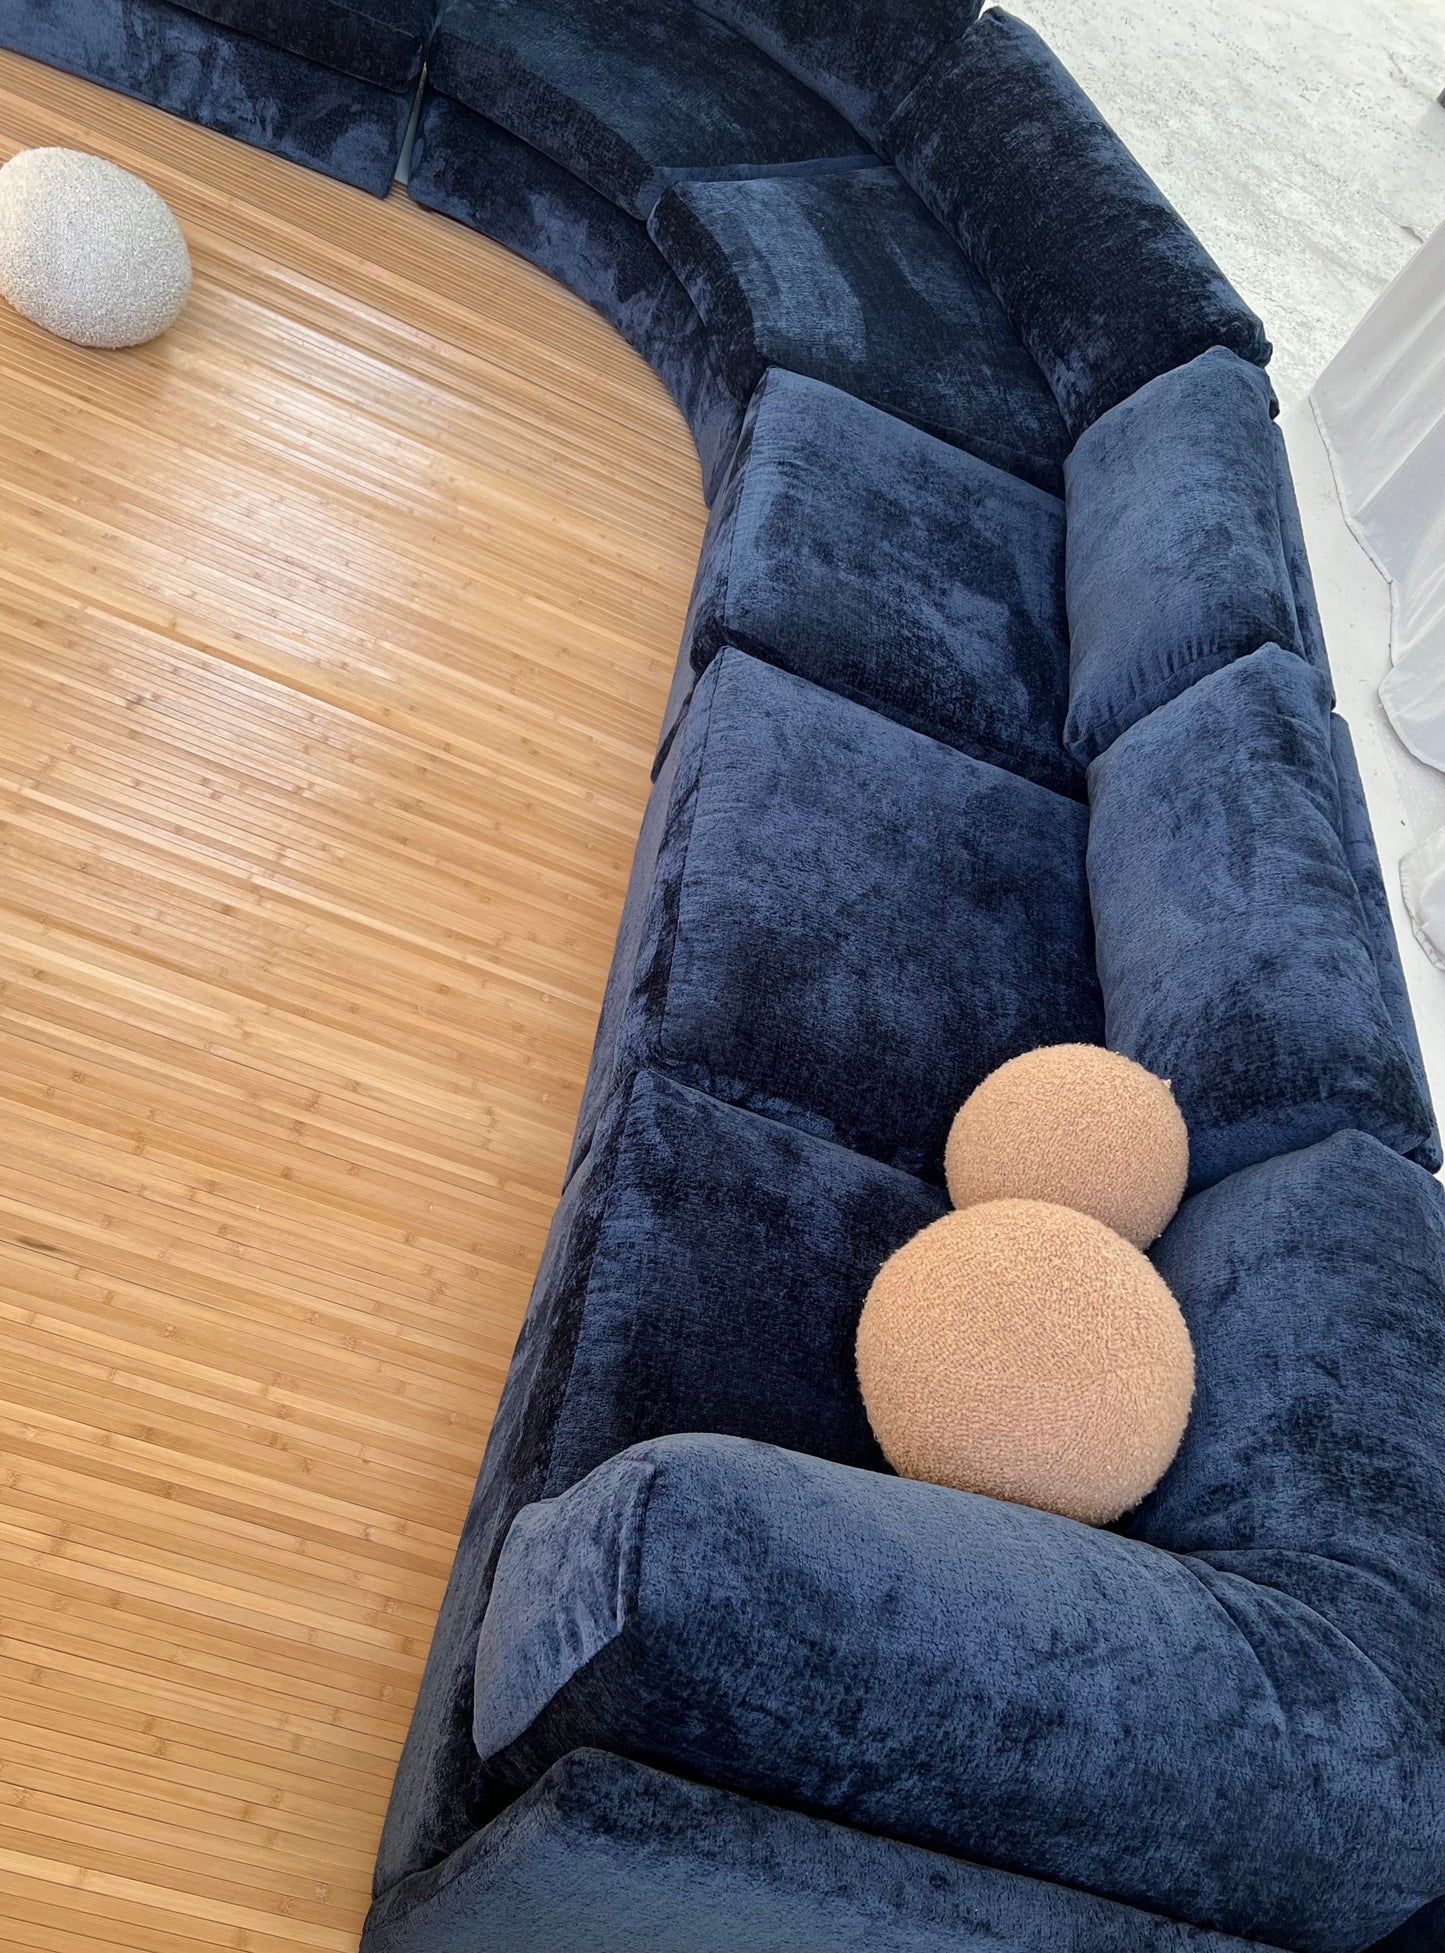 Bespoke Curved Navy Chenille Modular Sofa